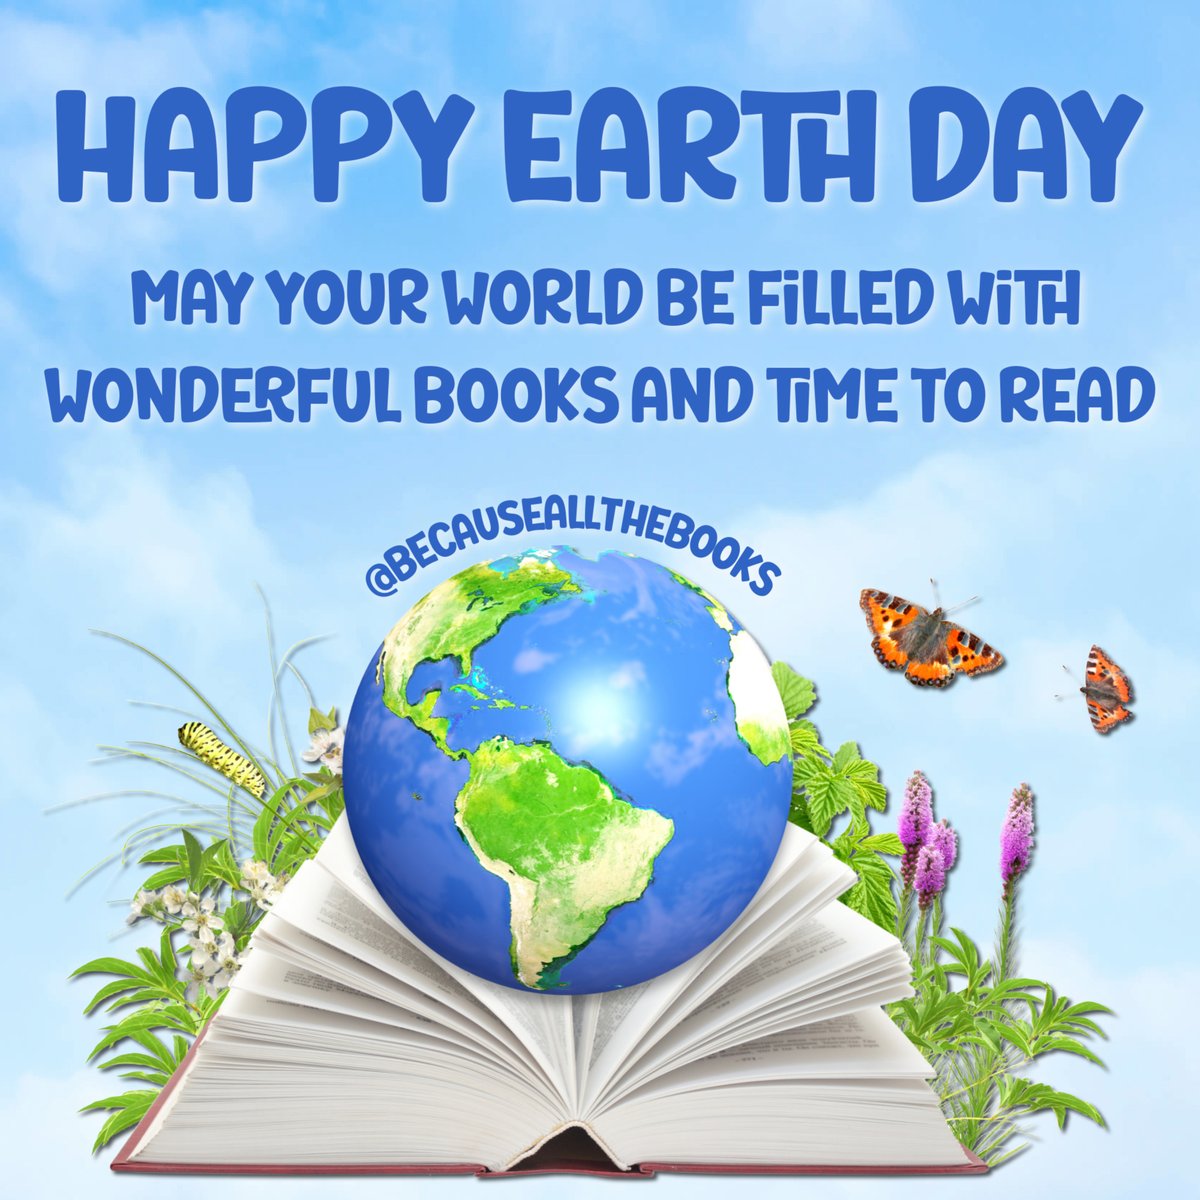 Happy Earth Day! 

#BecauseAllTheBooks #HappyEarthDay #TimeToRead #LetsRead